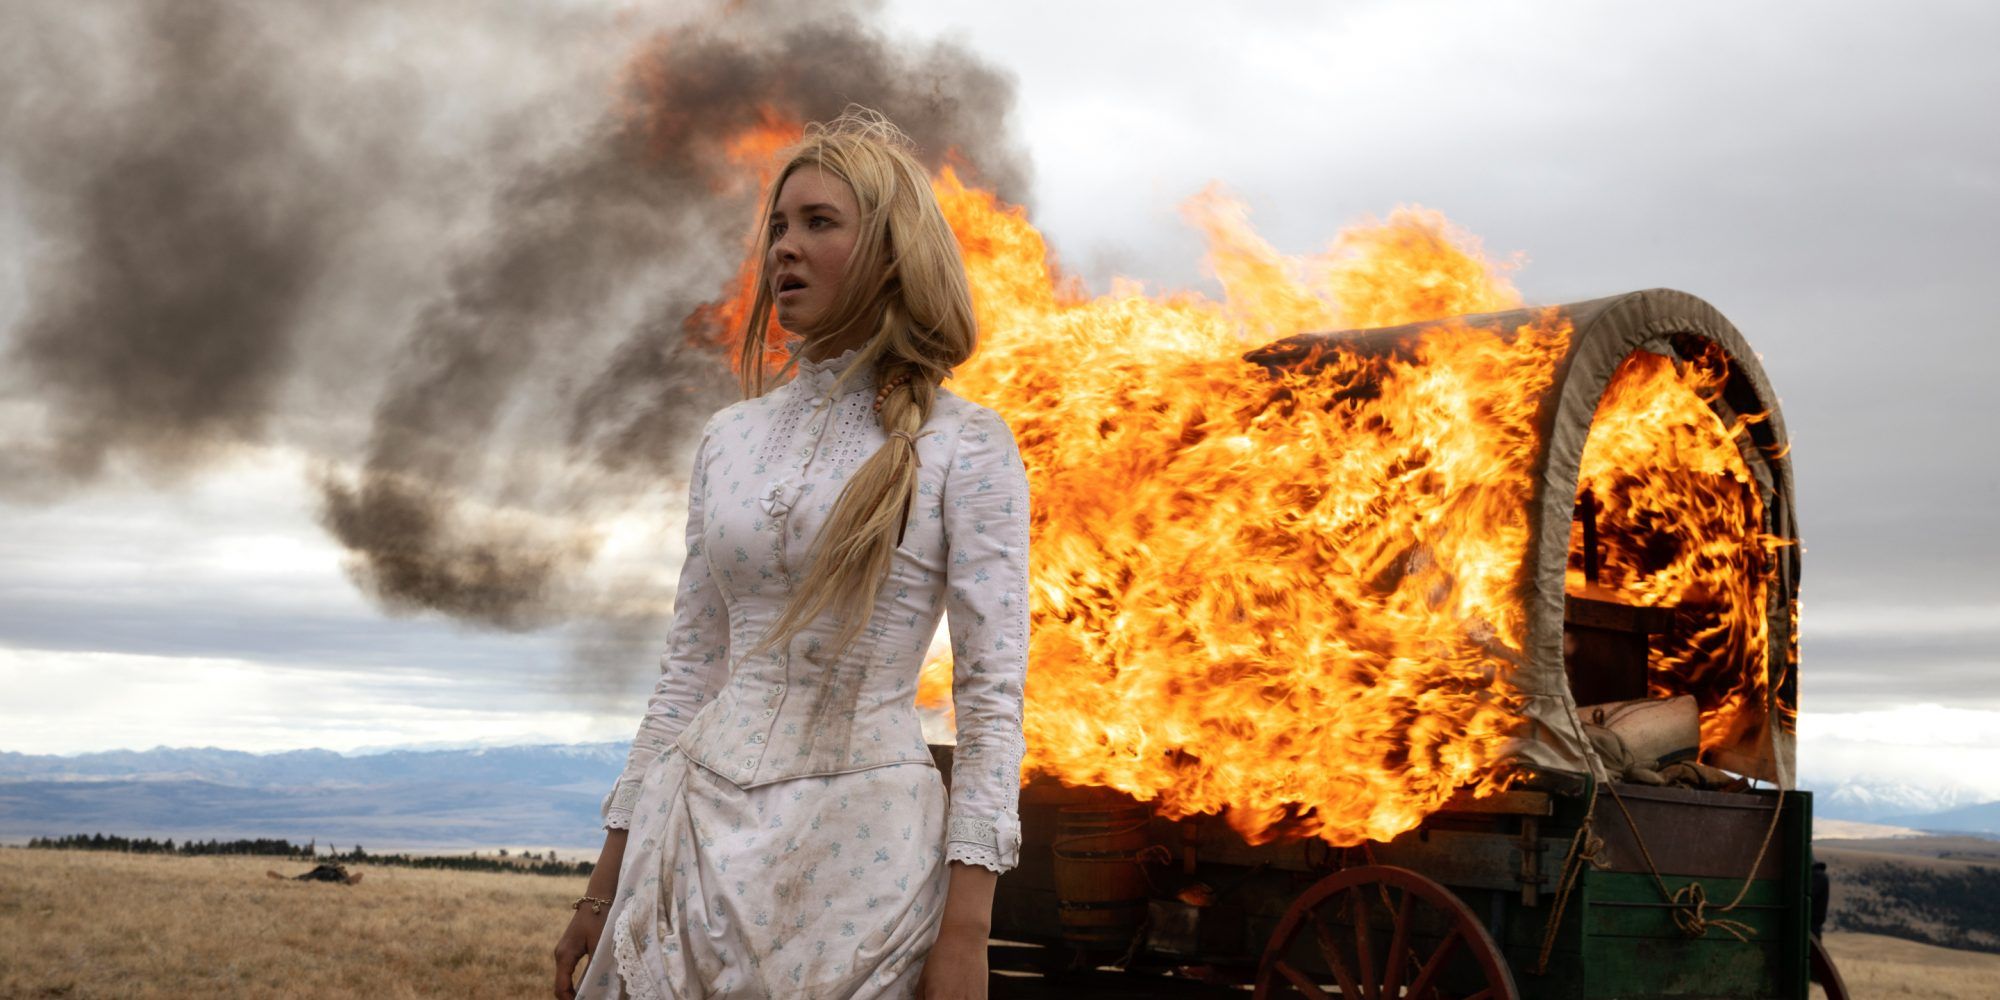 Elsa walks away from a burning wagon